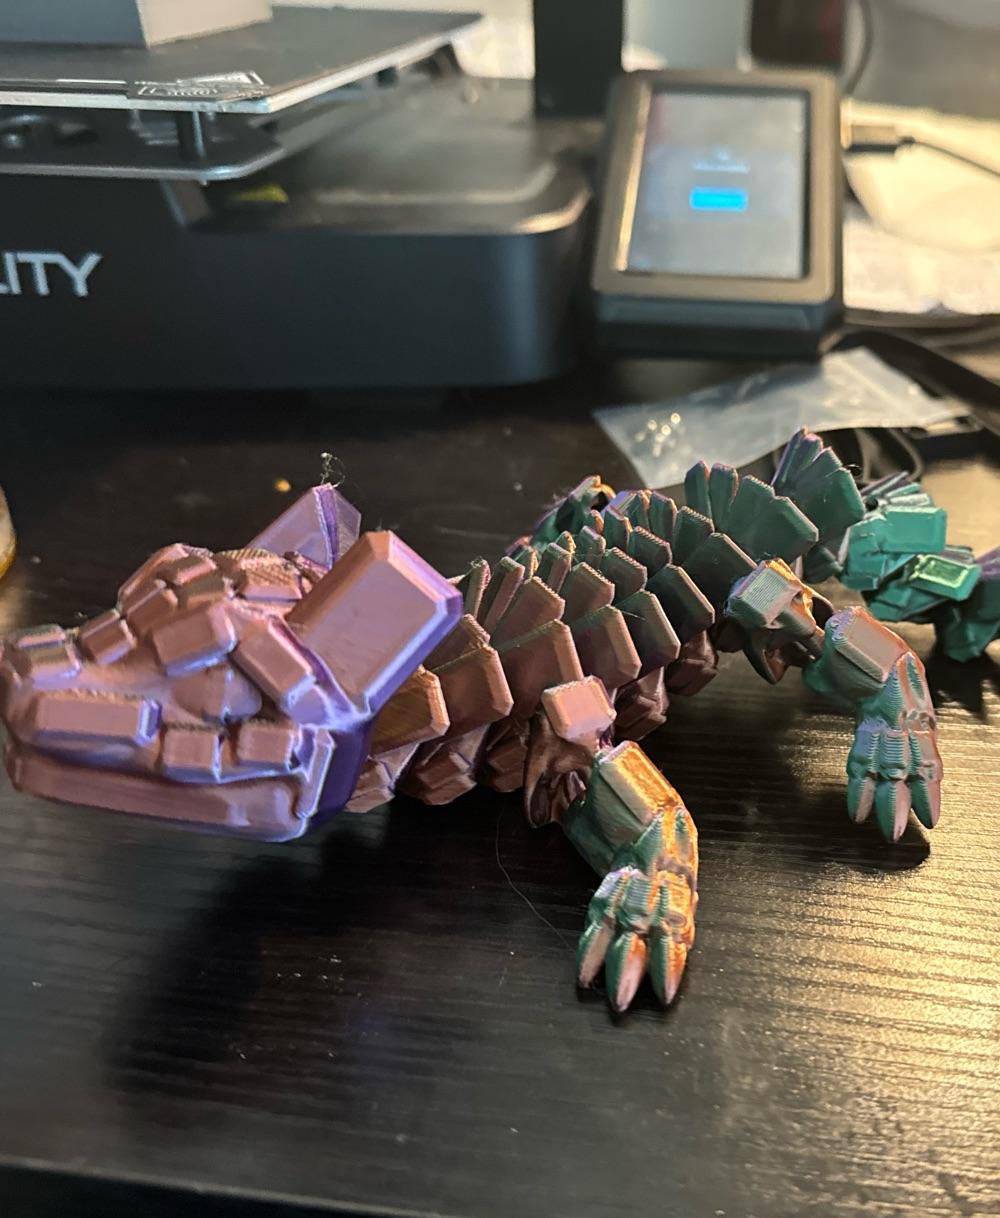 Articulated Dragon - Emerald Dragon - Snap-Flex Fidget Toy 3d model